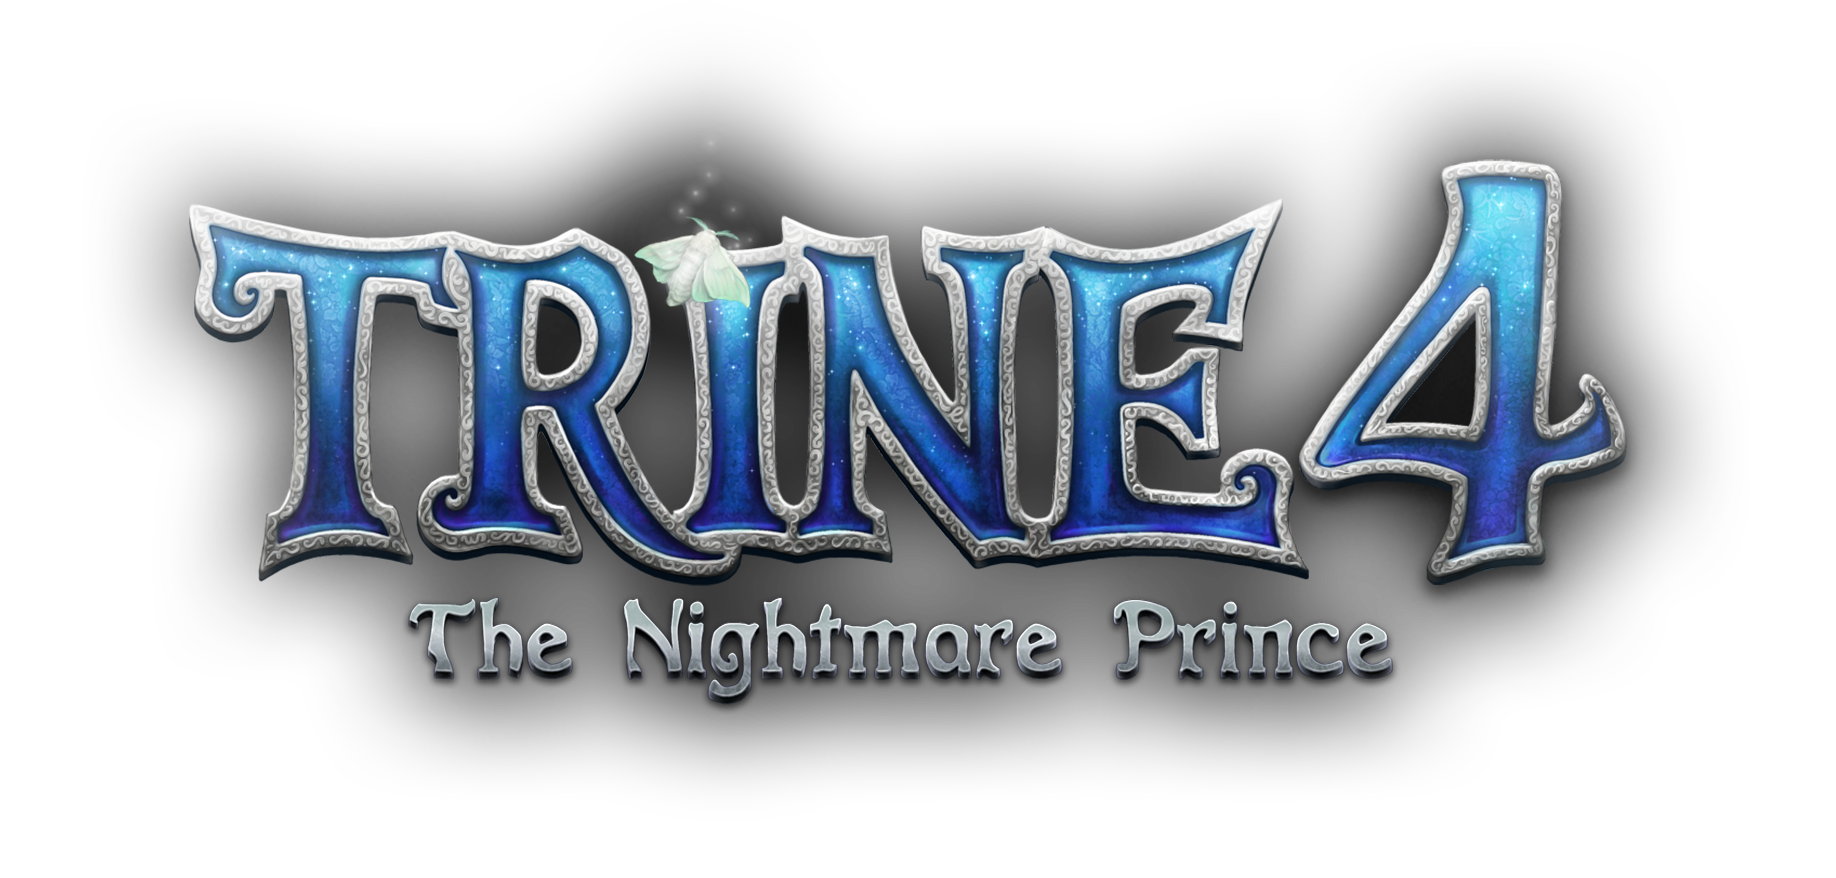 Ð�Ð°Ñ�Ñ�Ð¸Ð½ÐºÐ¸ Ð¿Ð¾ Ð·Ð°Ð¿Ñ�Ð¾Ñ�Ñ� trine 4 the nightmare prince log